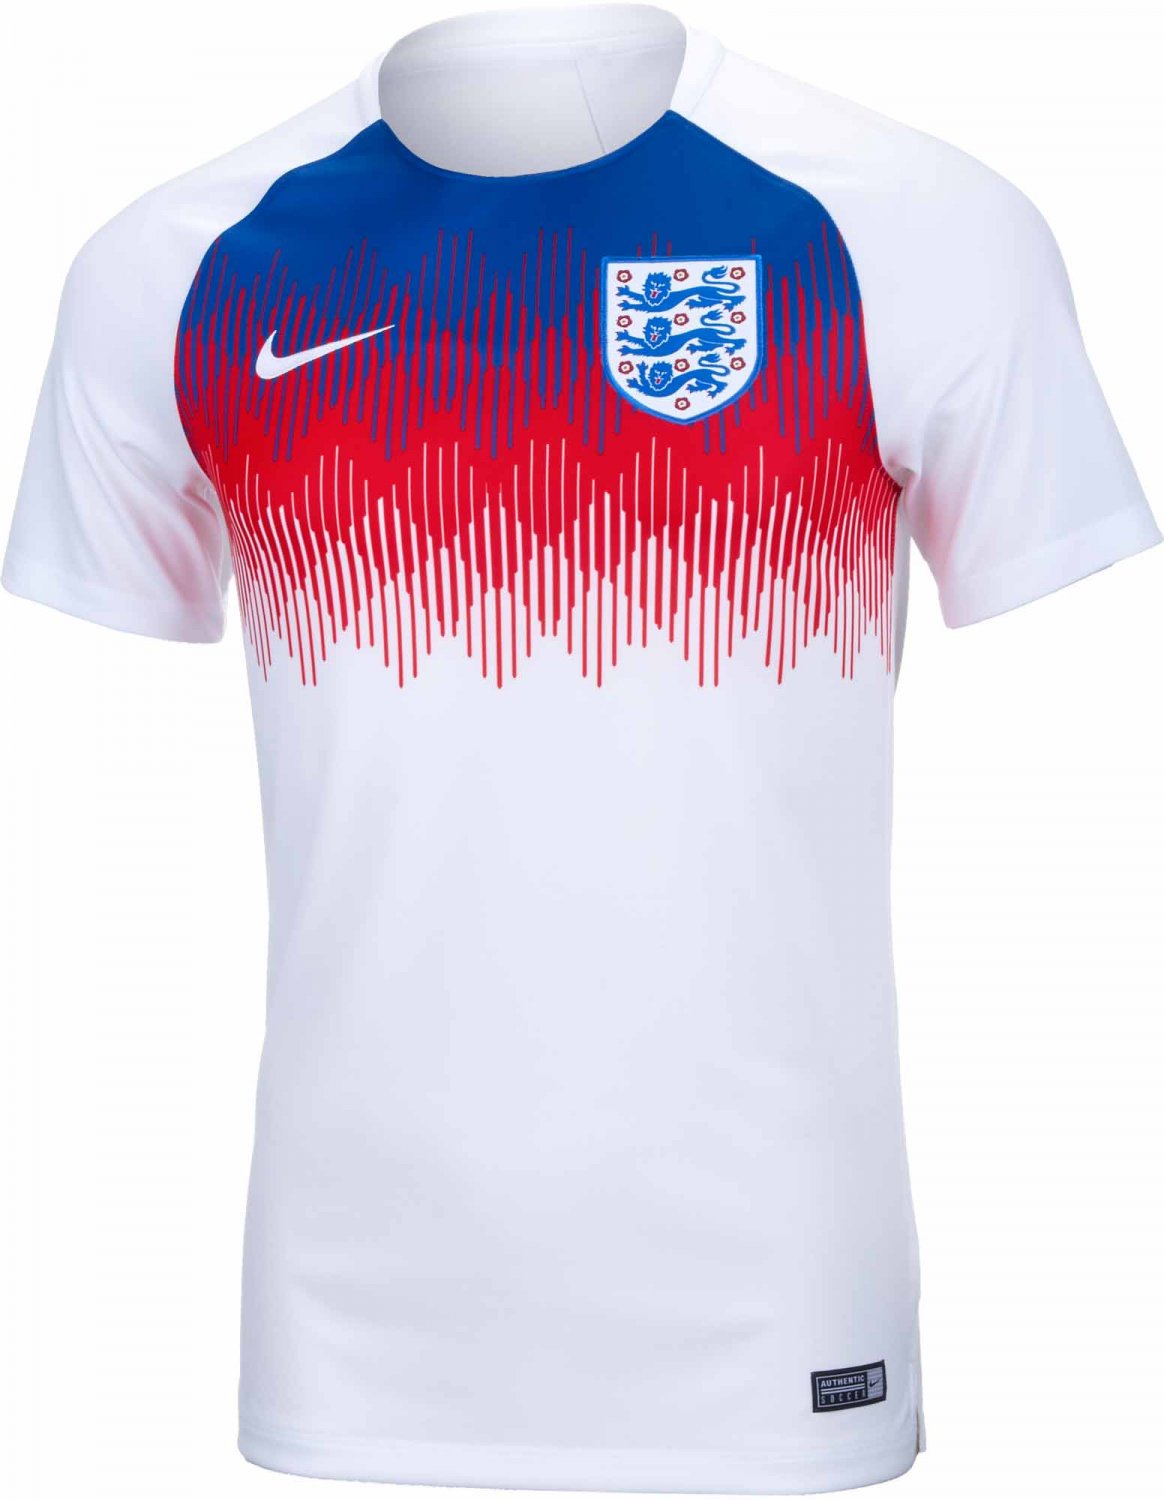 England Soccer Team Uniform / England Football Team Euro 2021 Jersey